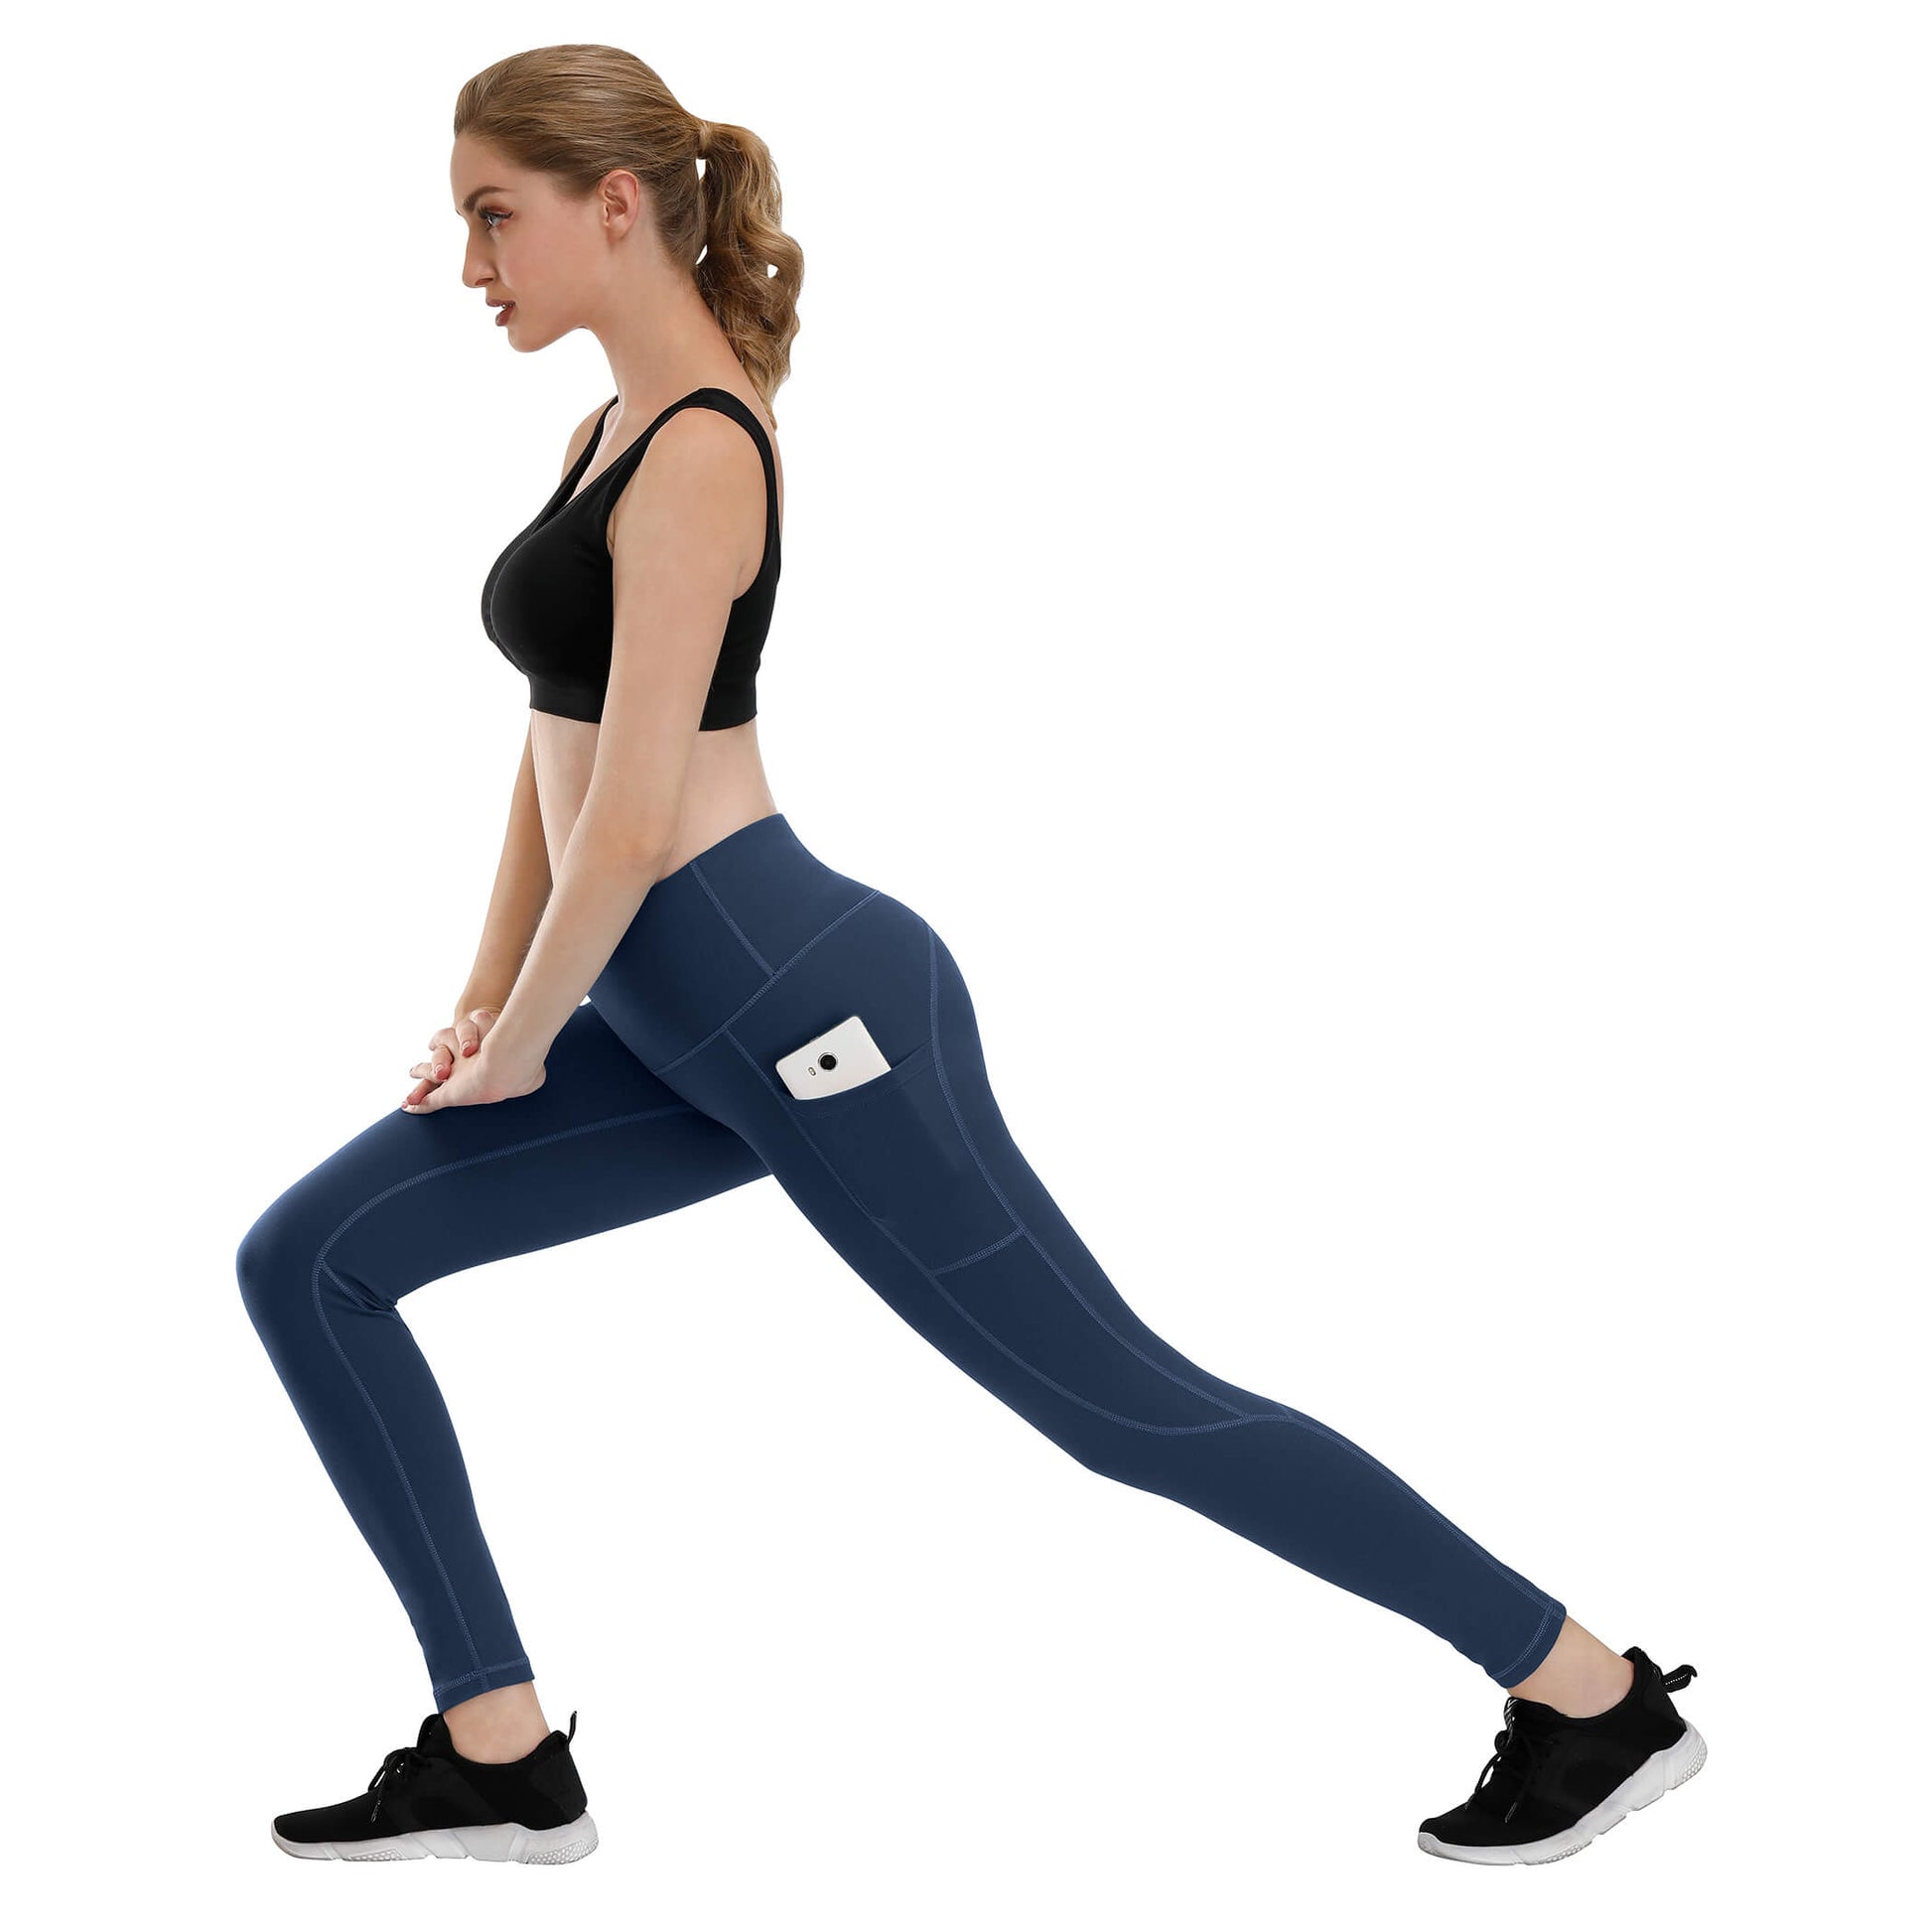 13) LifeSky Yoga Pants with Pockets